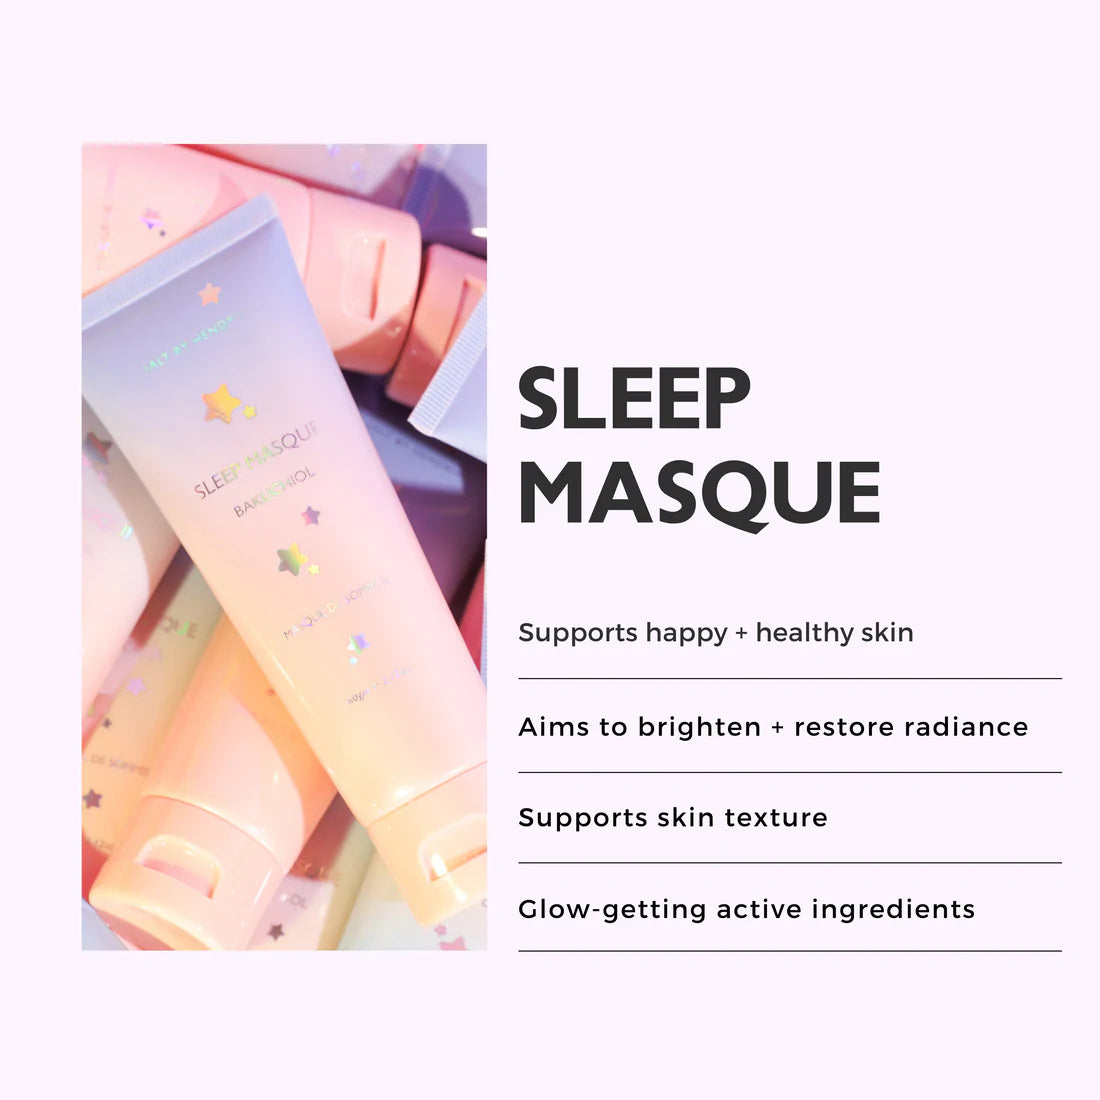 Sleep Masque